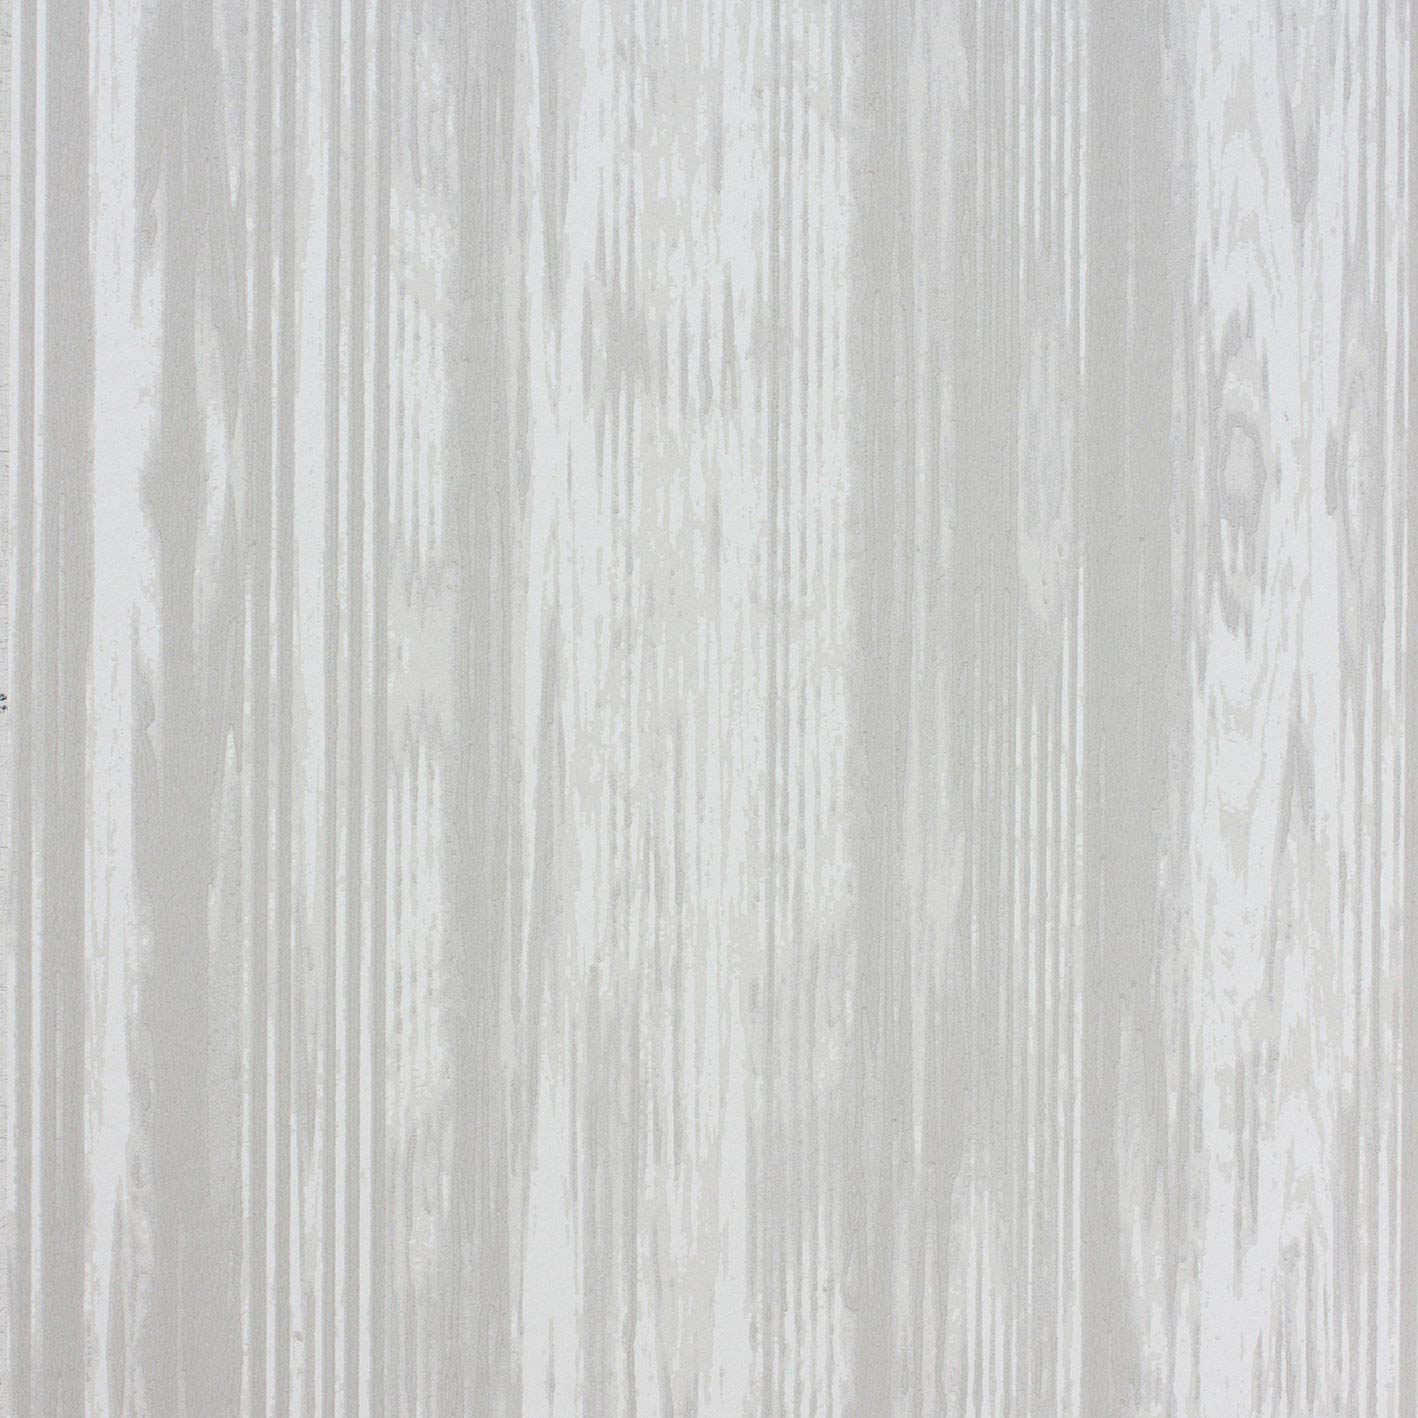 Nina Campbell Wallpaper - Les Rêves Pampelonne Grey NCW4305-01